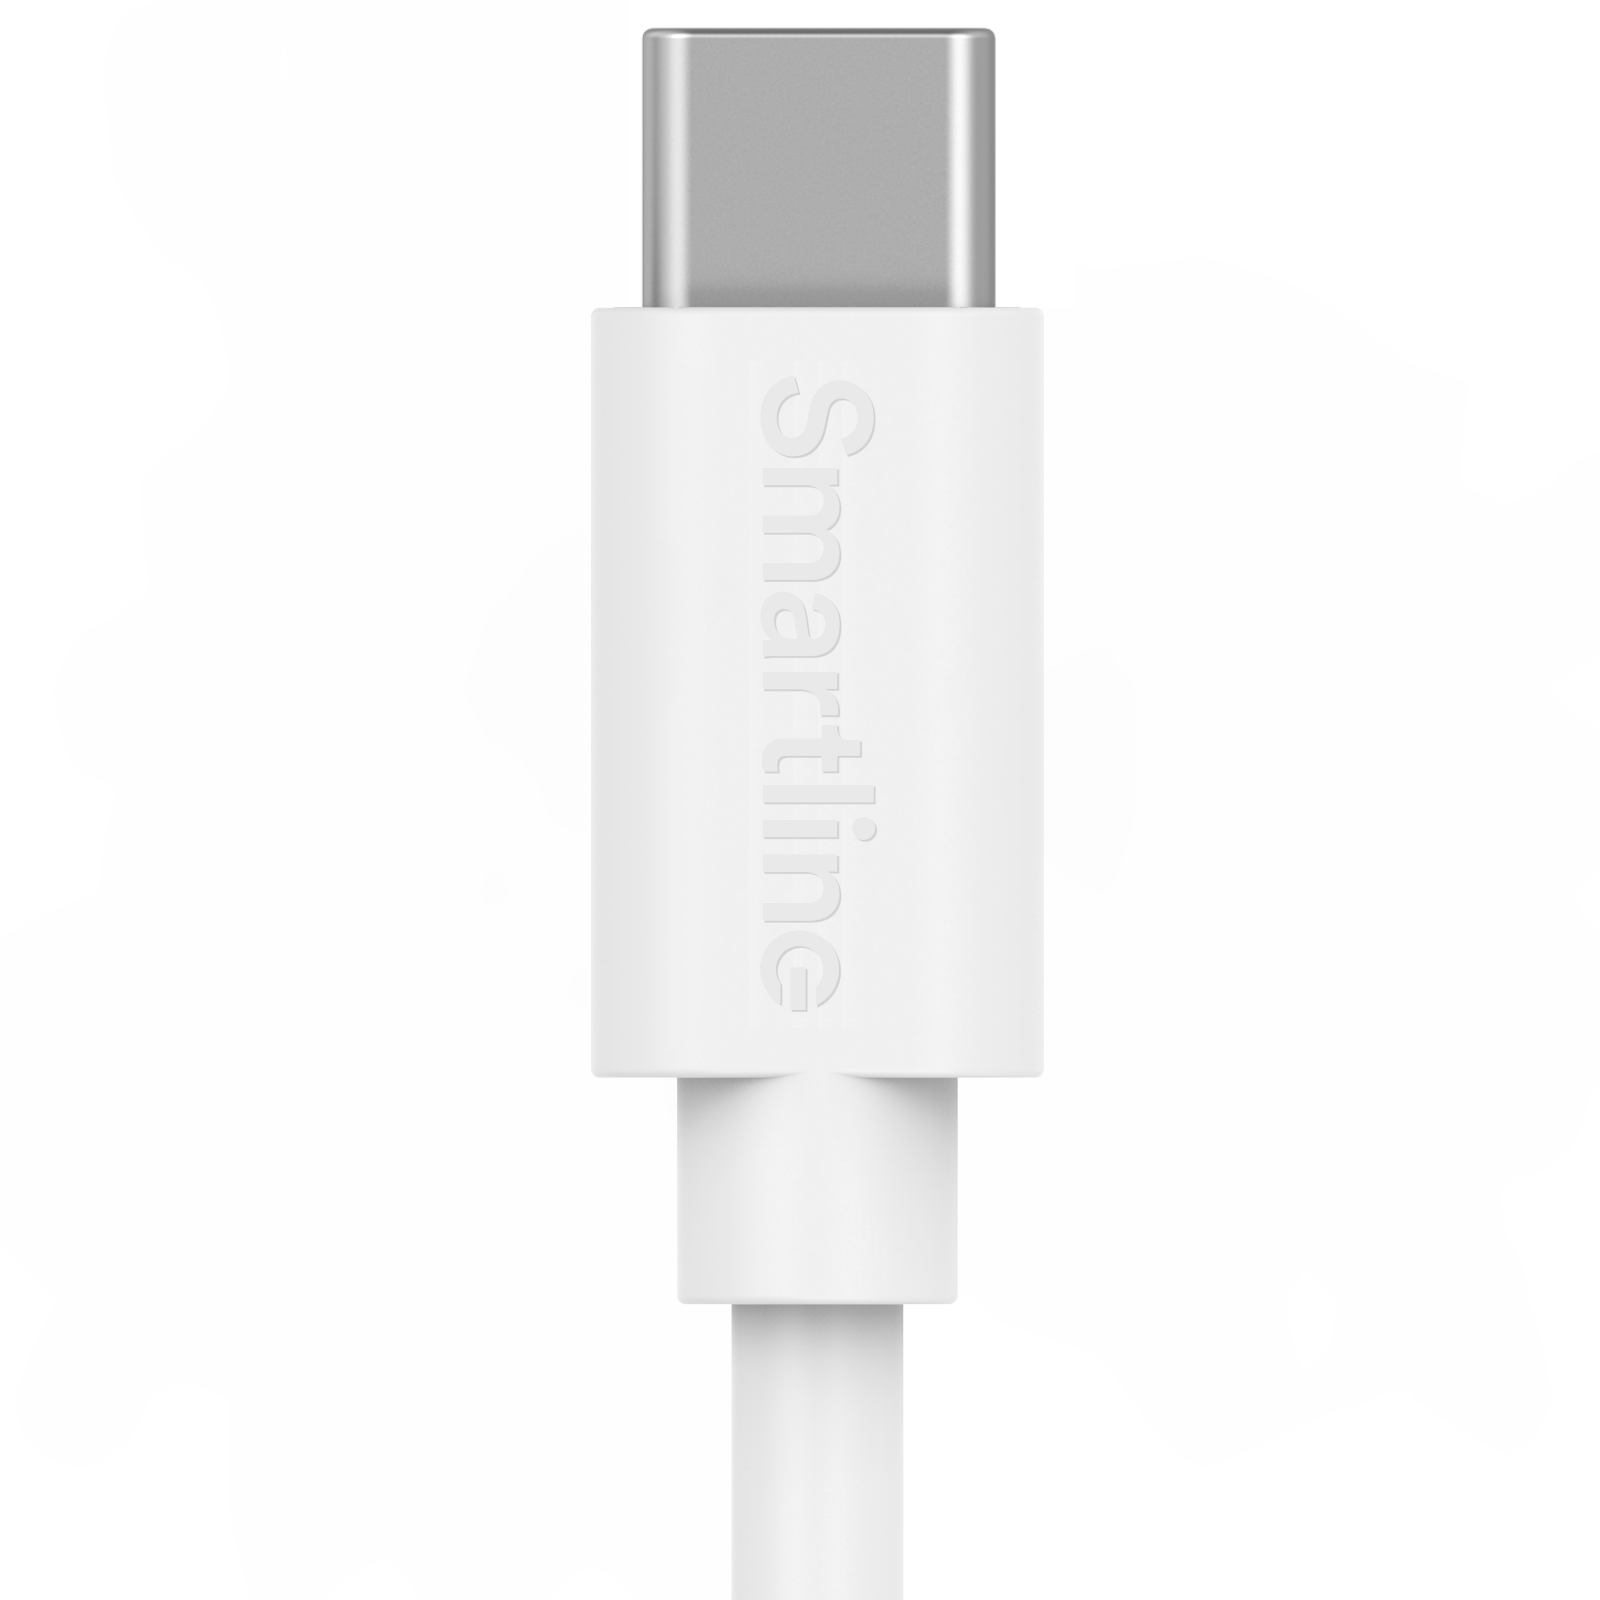 Komplett laddare Sony Xperia - 2m sladd & väggladdare USB-C - Smartline